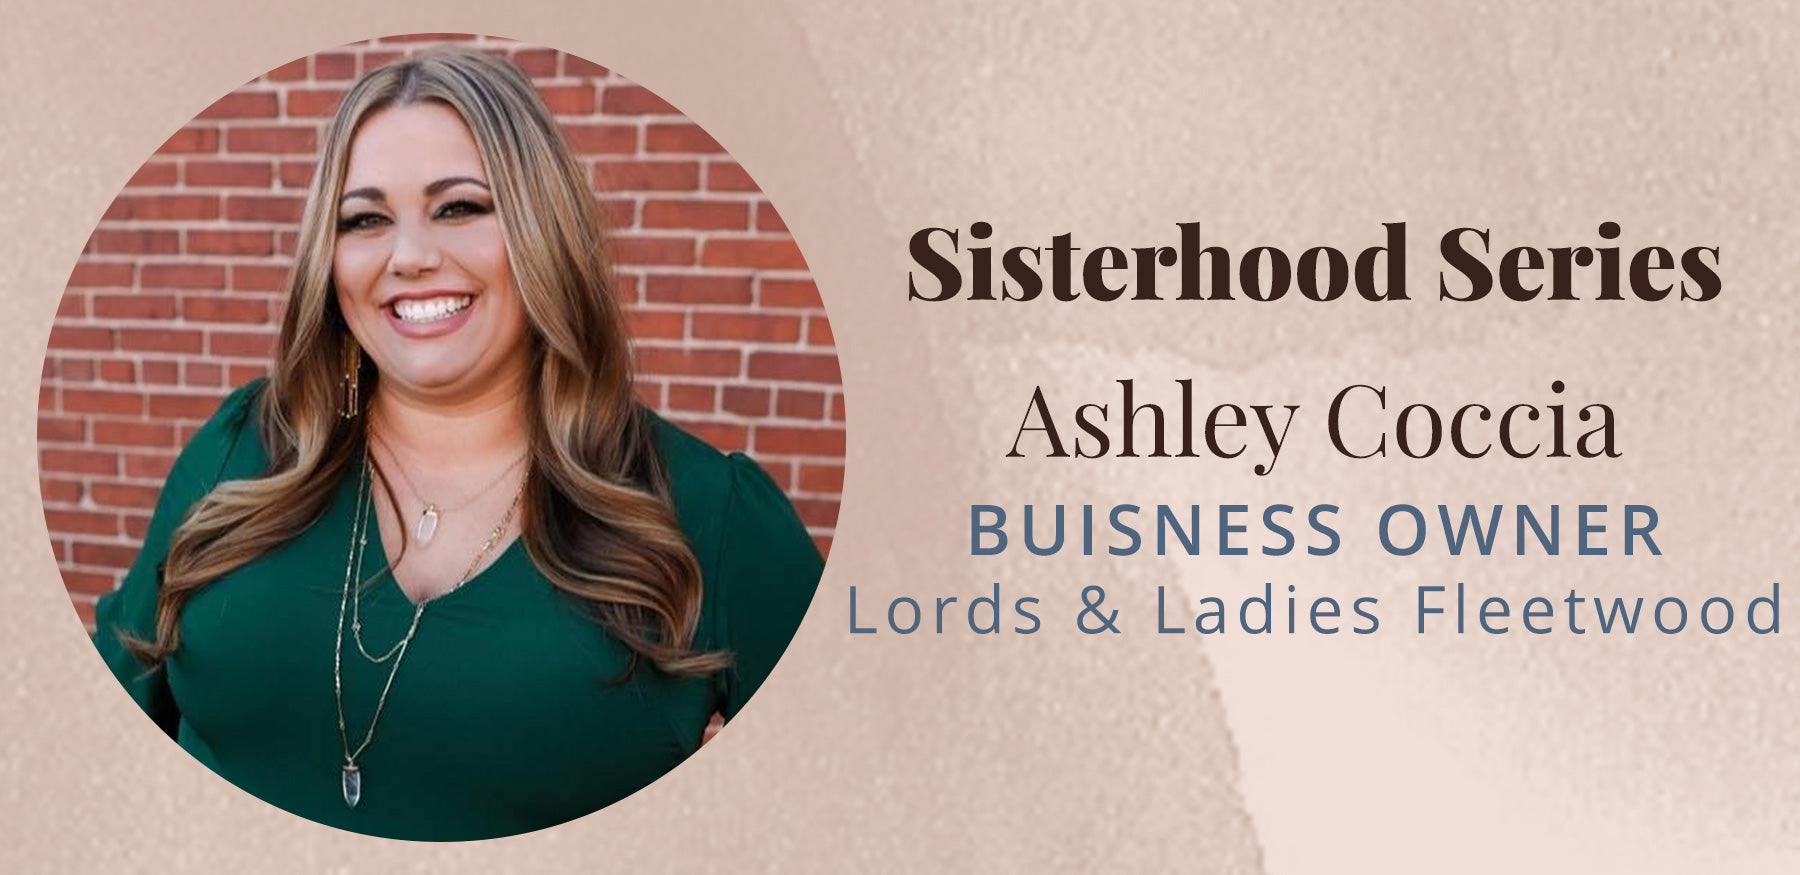 The Sisterhood Series with Ashley Coccia